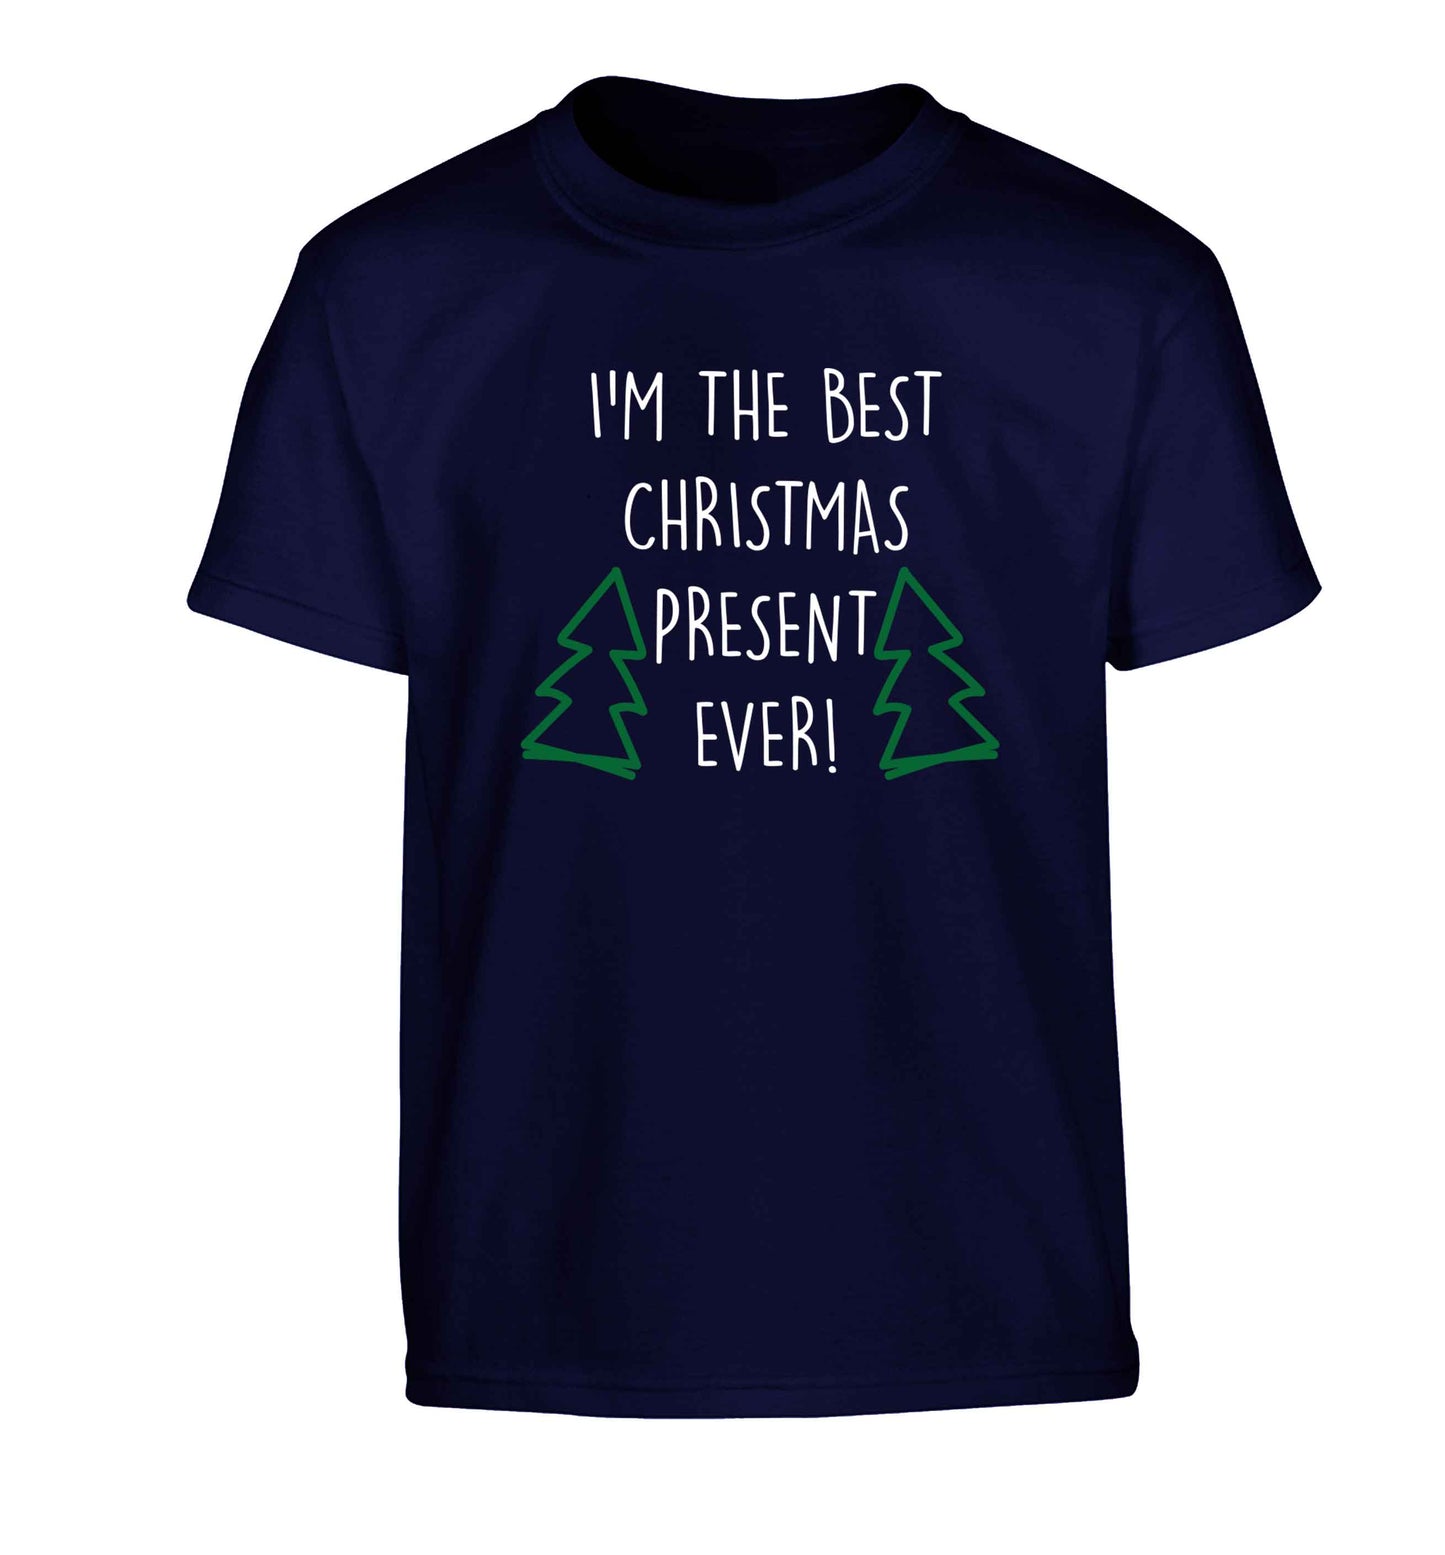 I'm the best Christmas present ever Children's navy Tshirt 12-13 Years